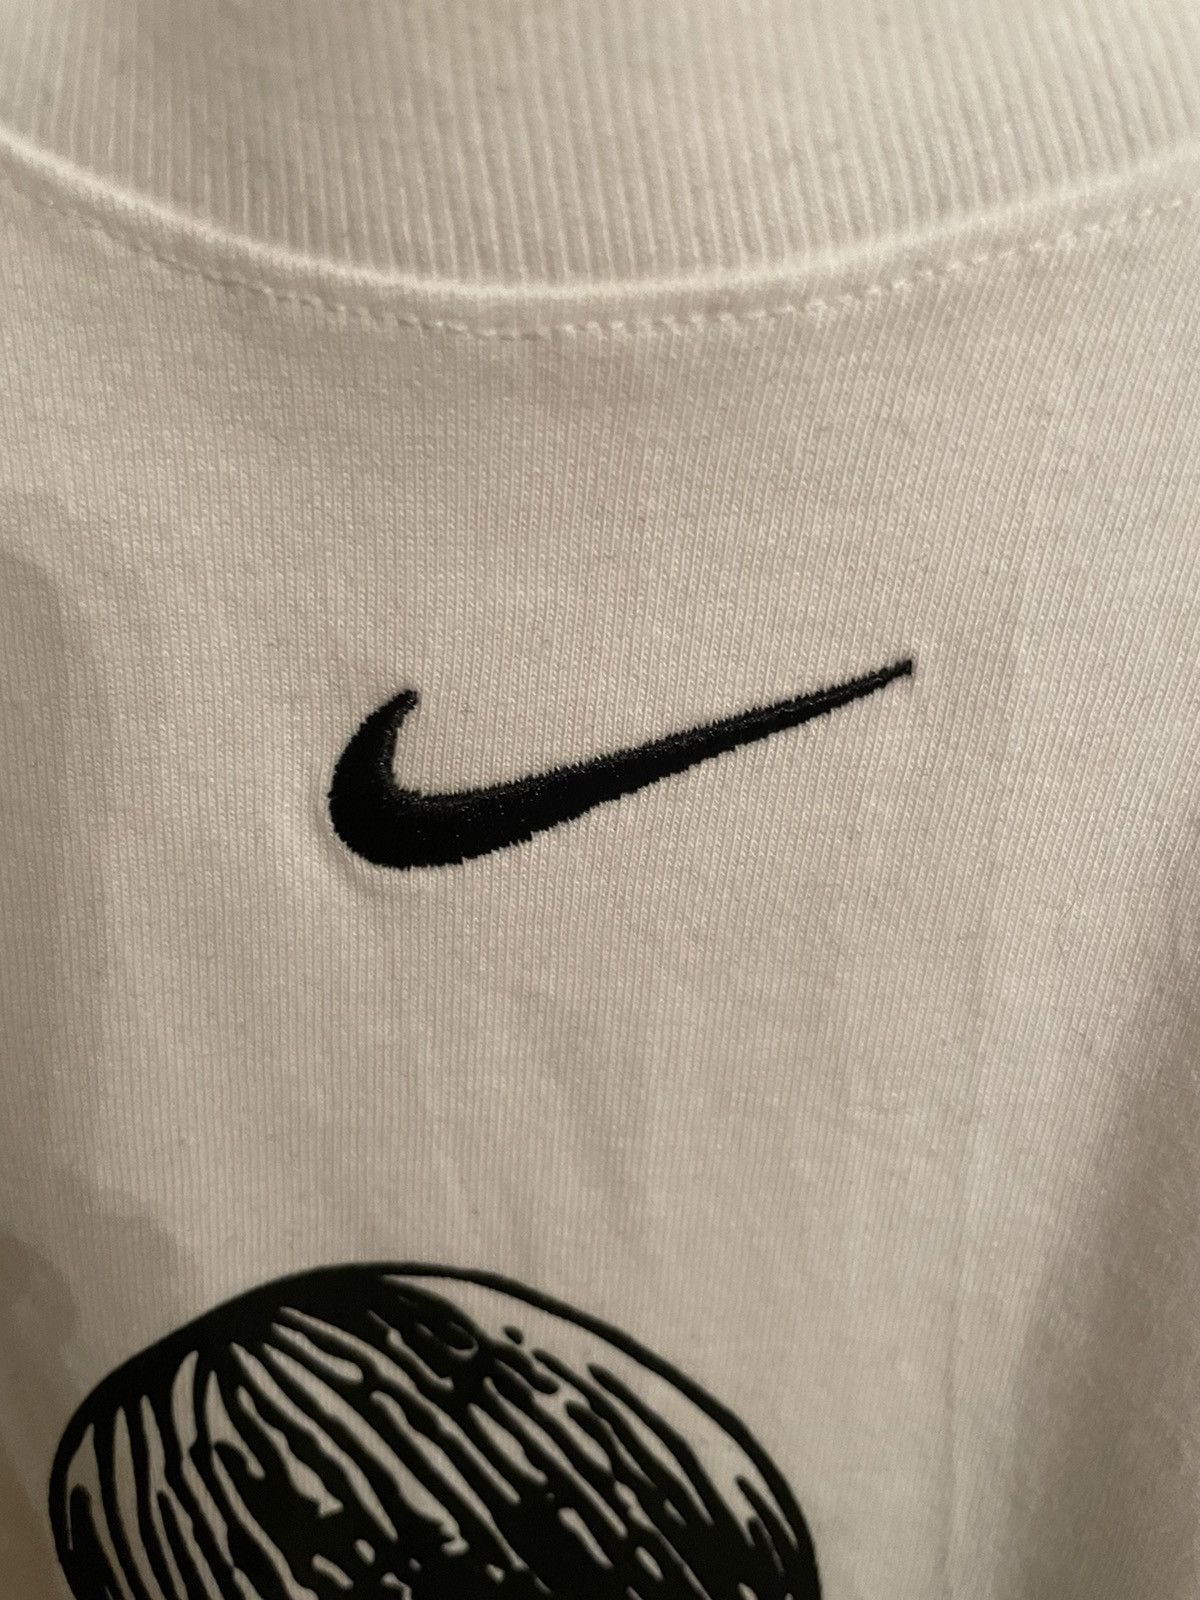 Nike Drake CLB Cupid Tee Size US L / EU 52-54 / 3 - 3 Thumbnail